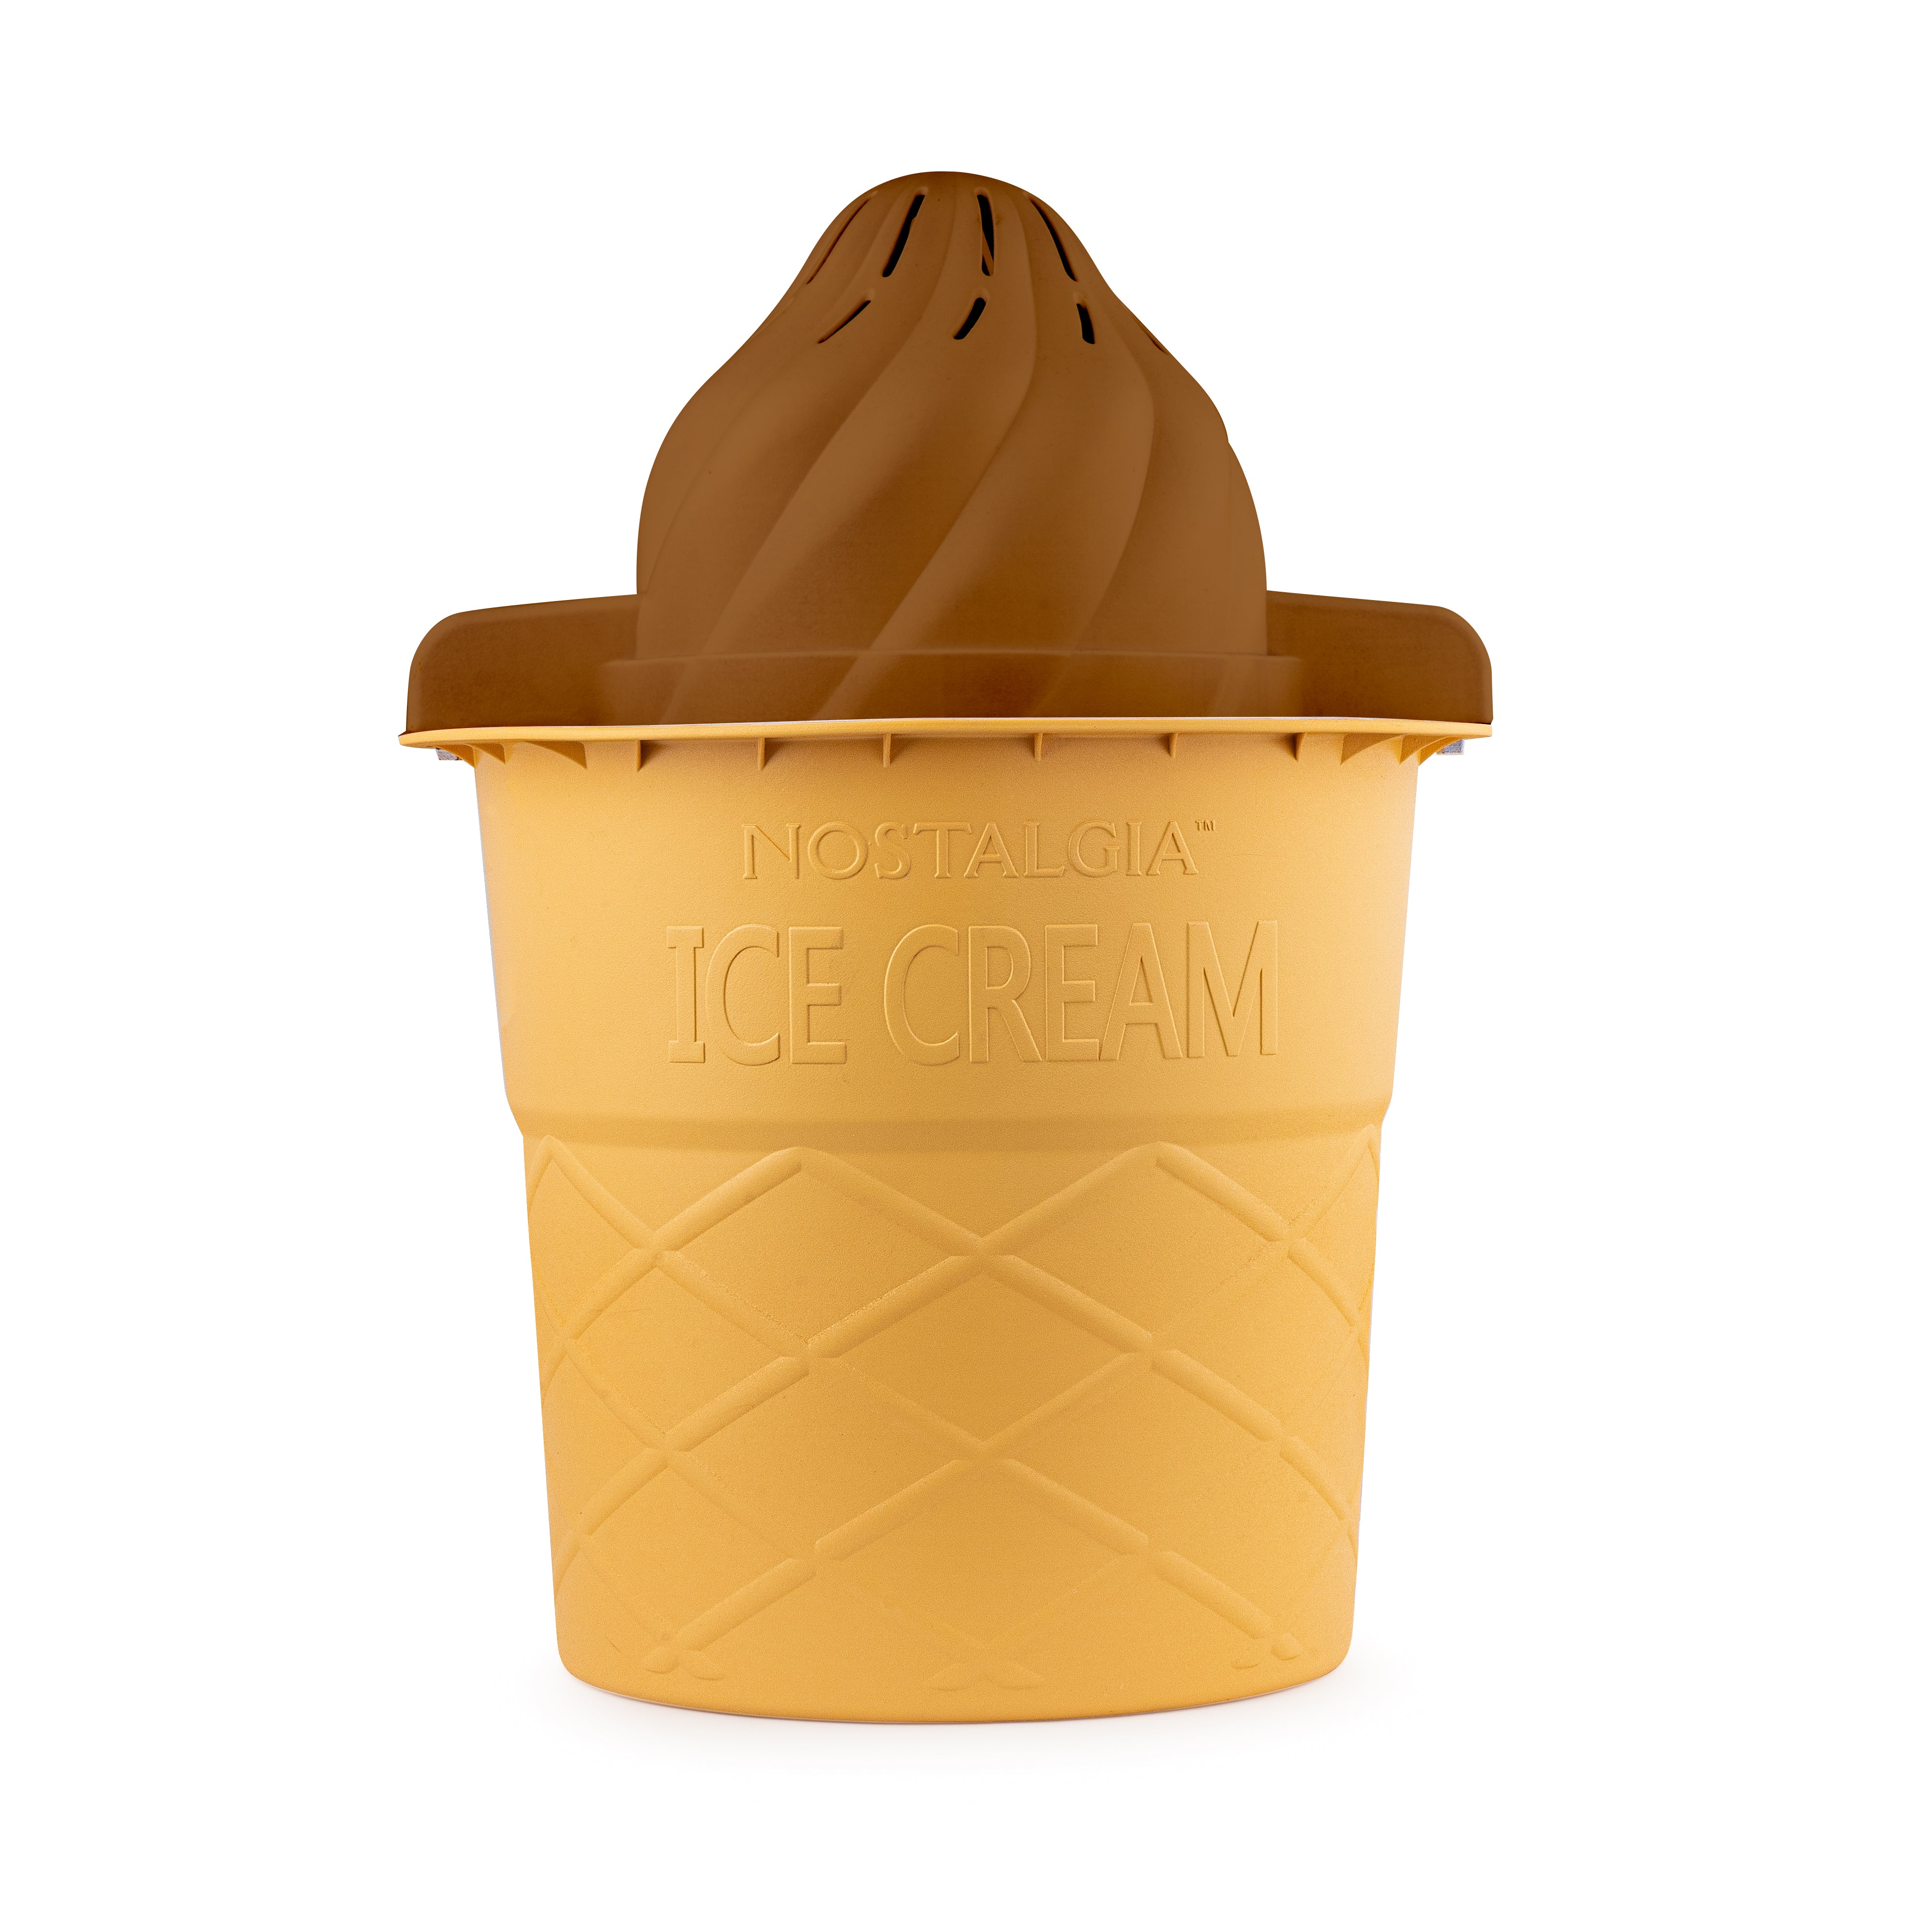 4-Quart Swirl Cone Ice Cream Maker, Chocolate Brown